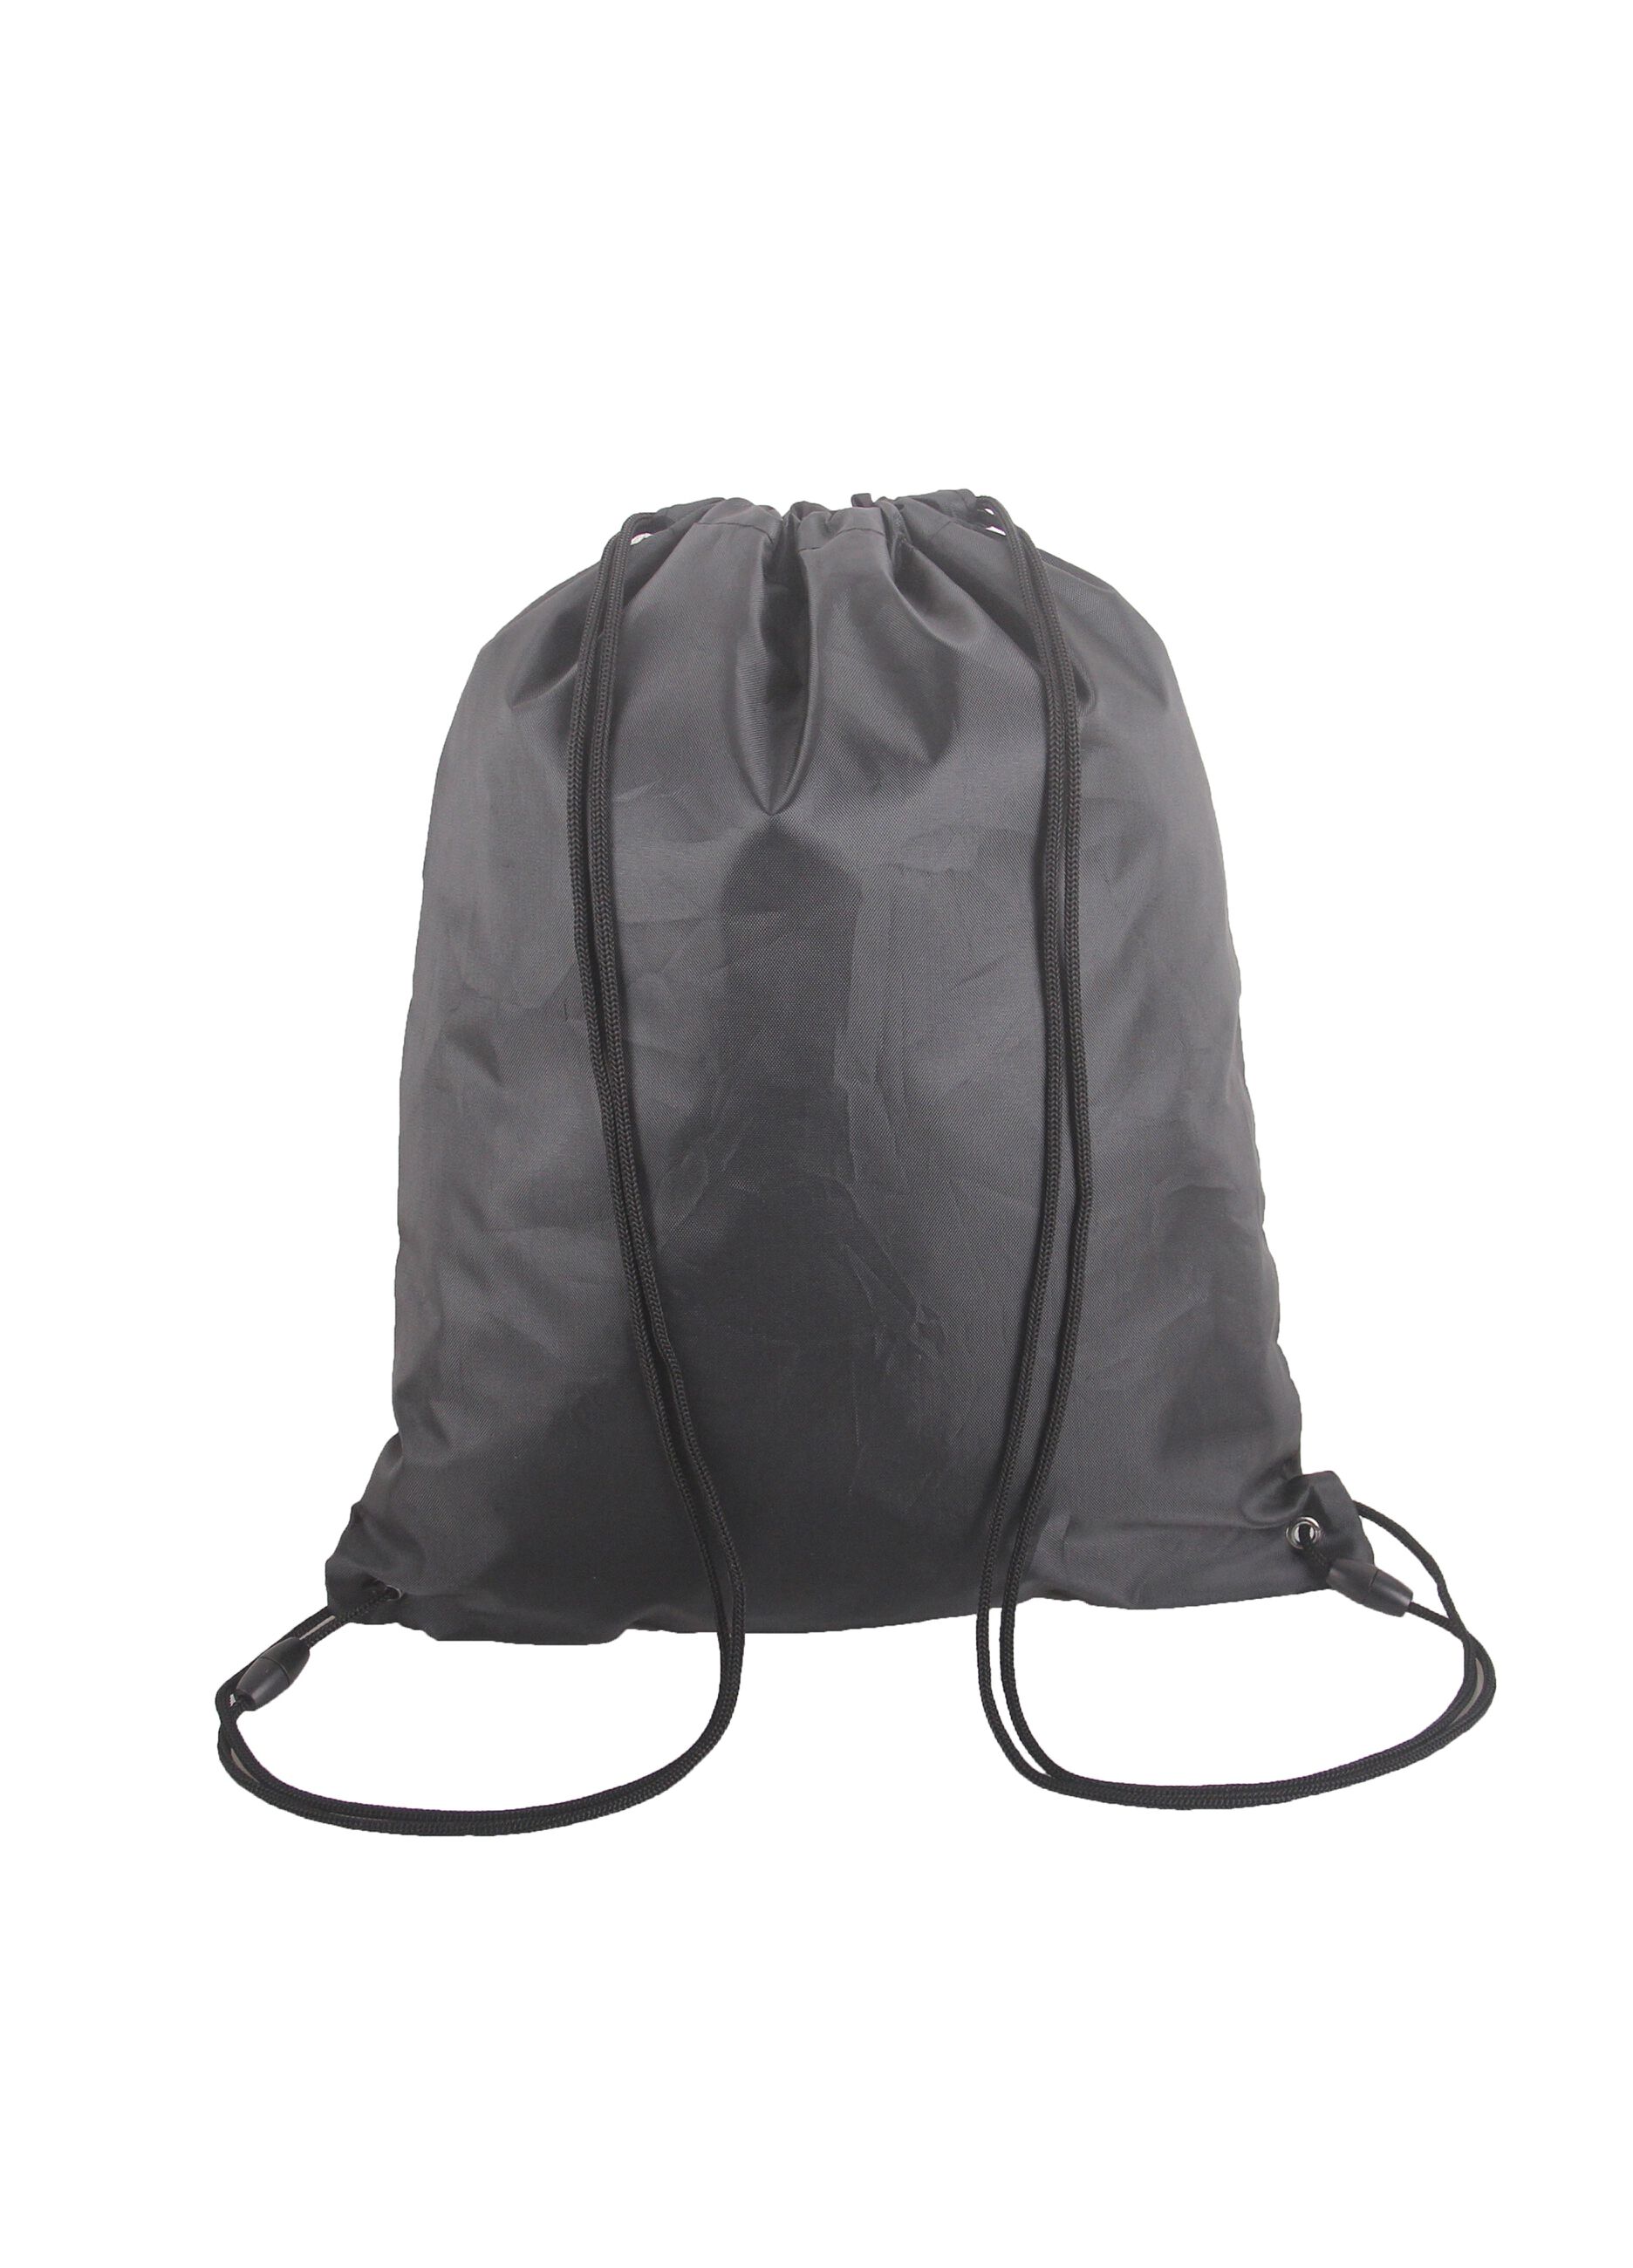 Drawstring backpack